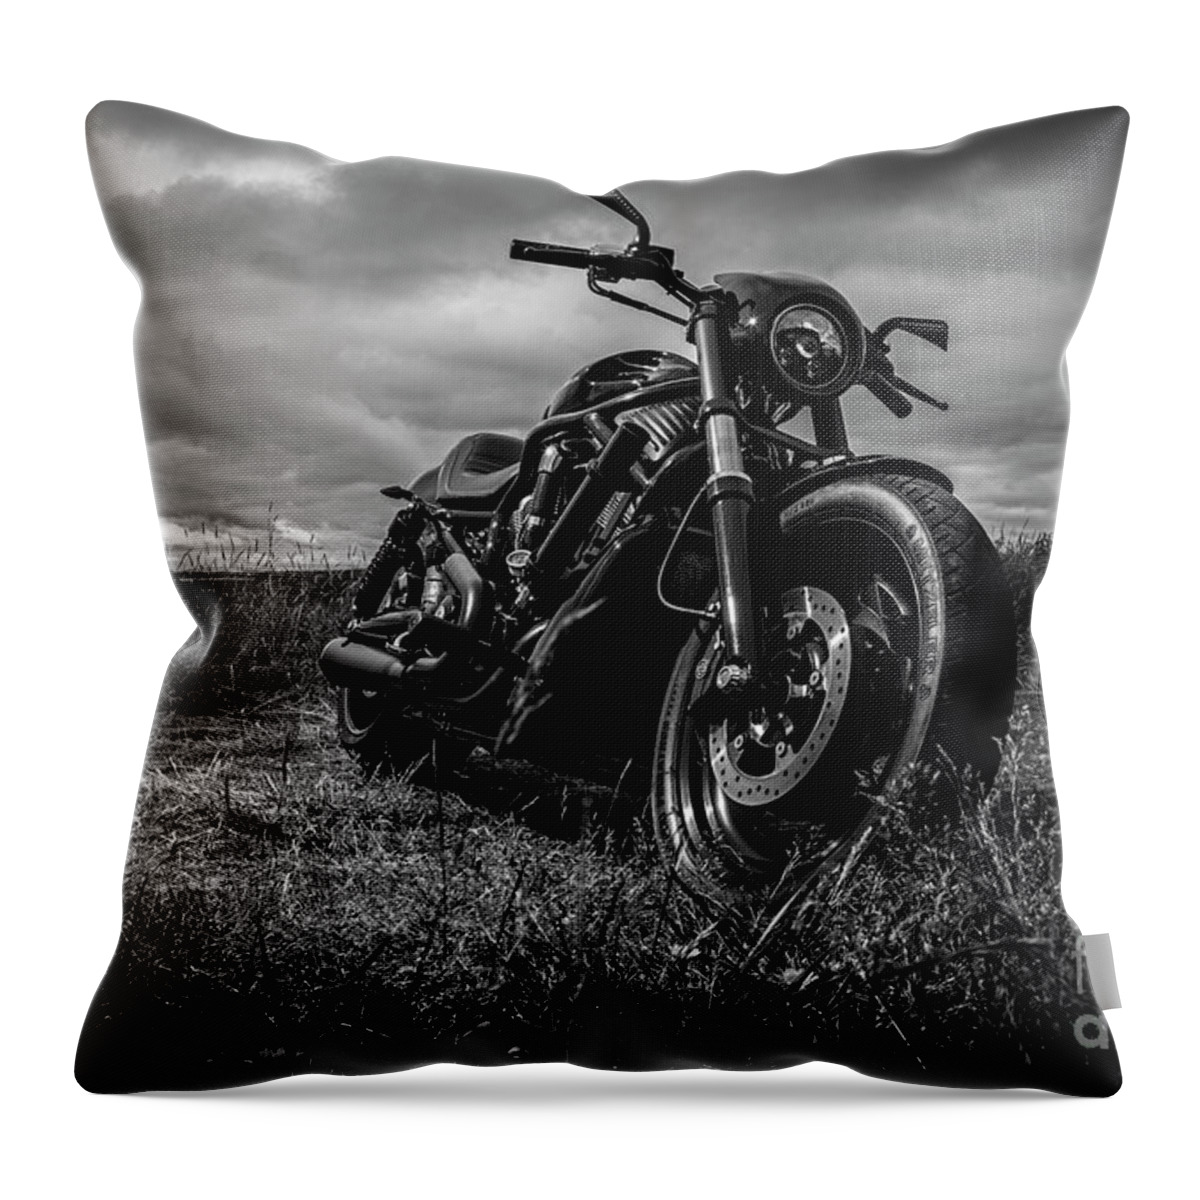 2007 Throw Pillow featuring the photograph Harley Davidson V-rod night rod vrscd #1 by Gunnar Orn Arnason